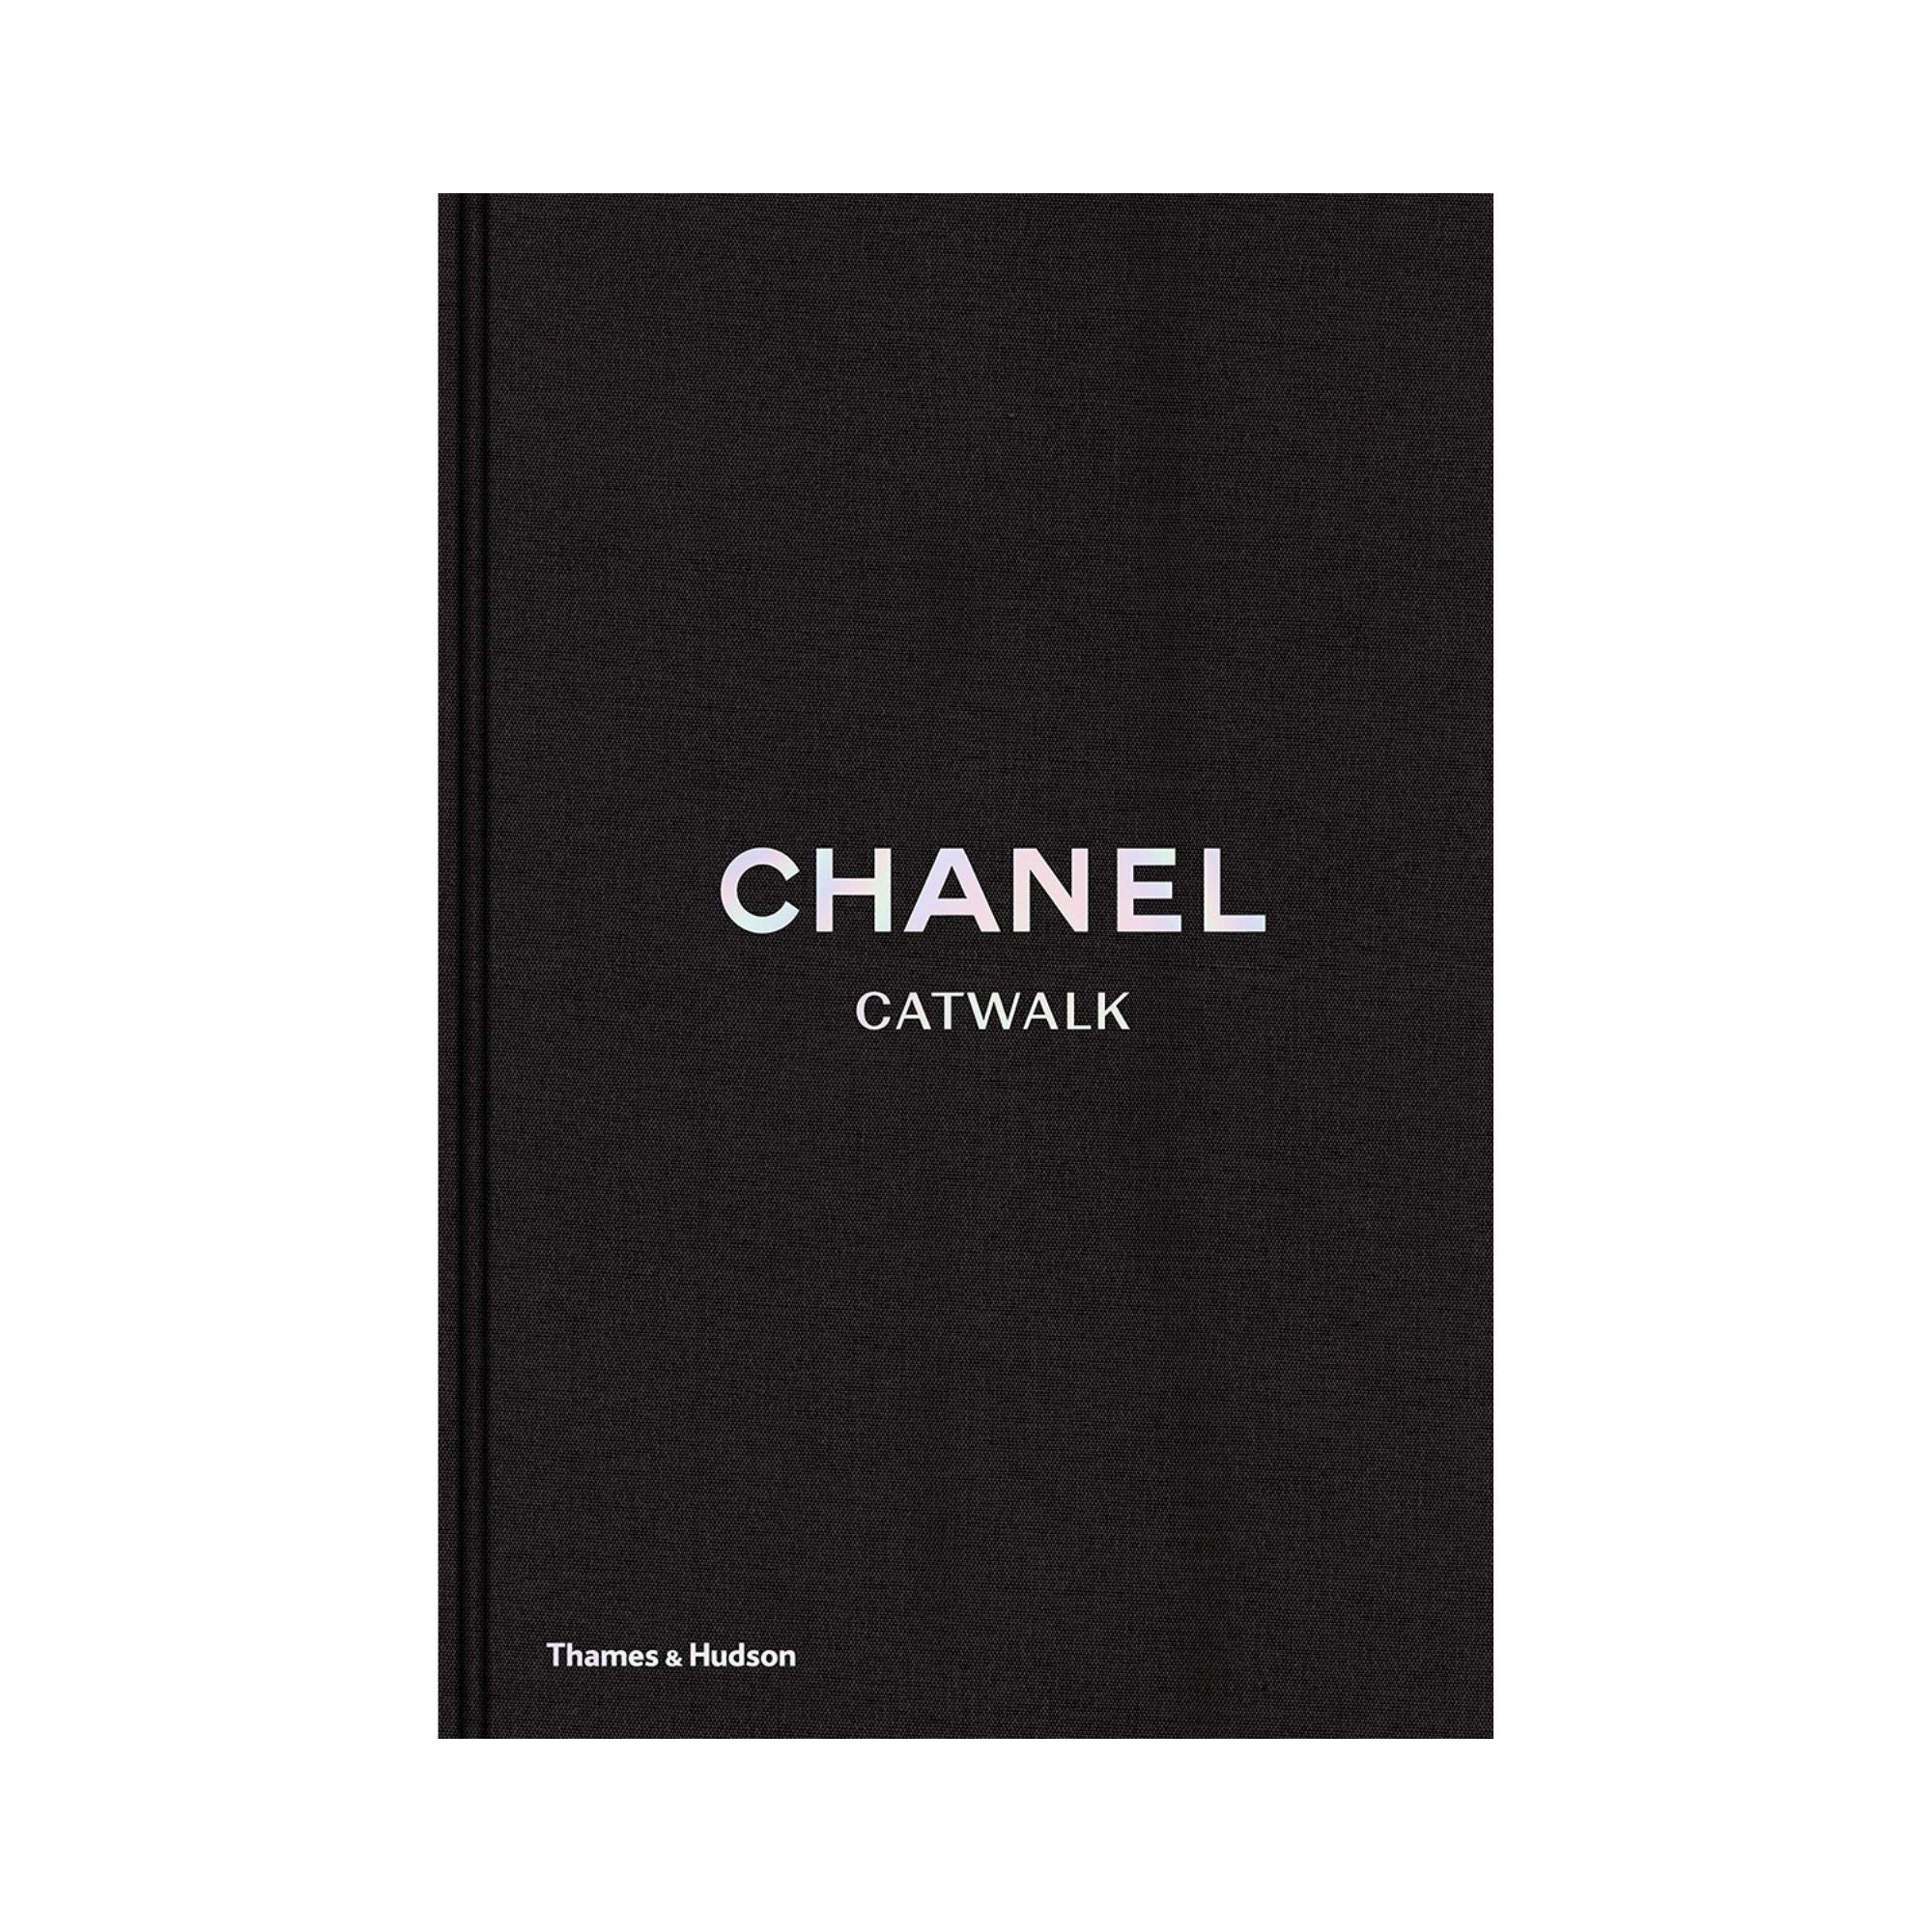 Chanel Catwalk - THAT COOL LIVING